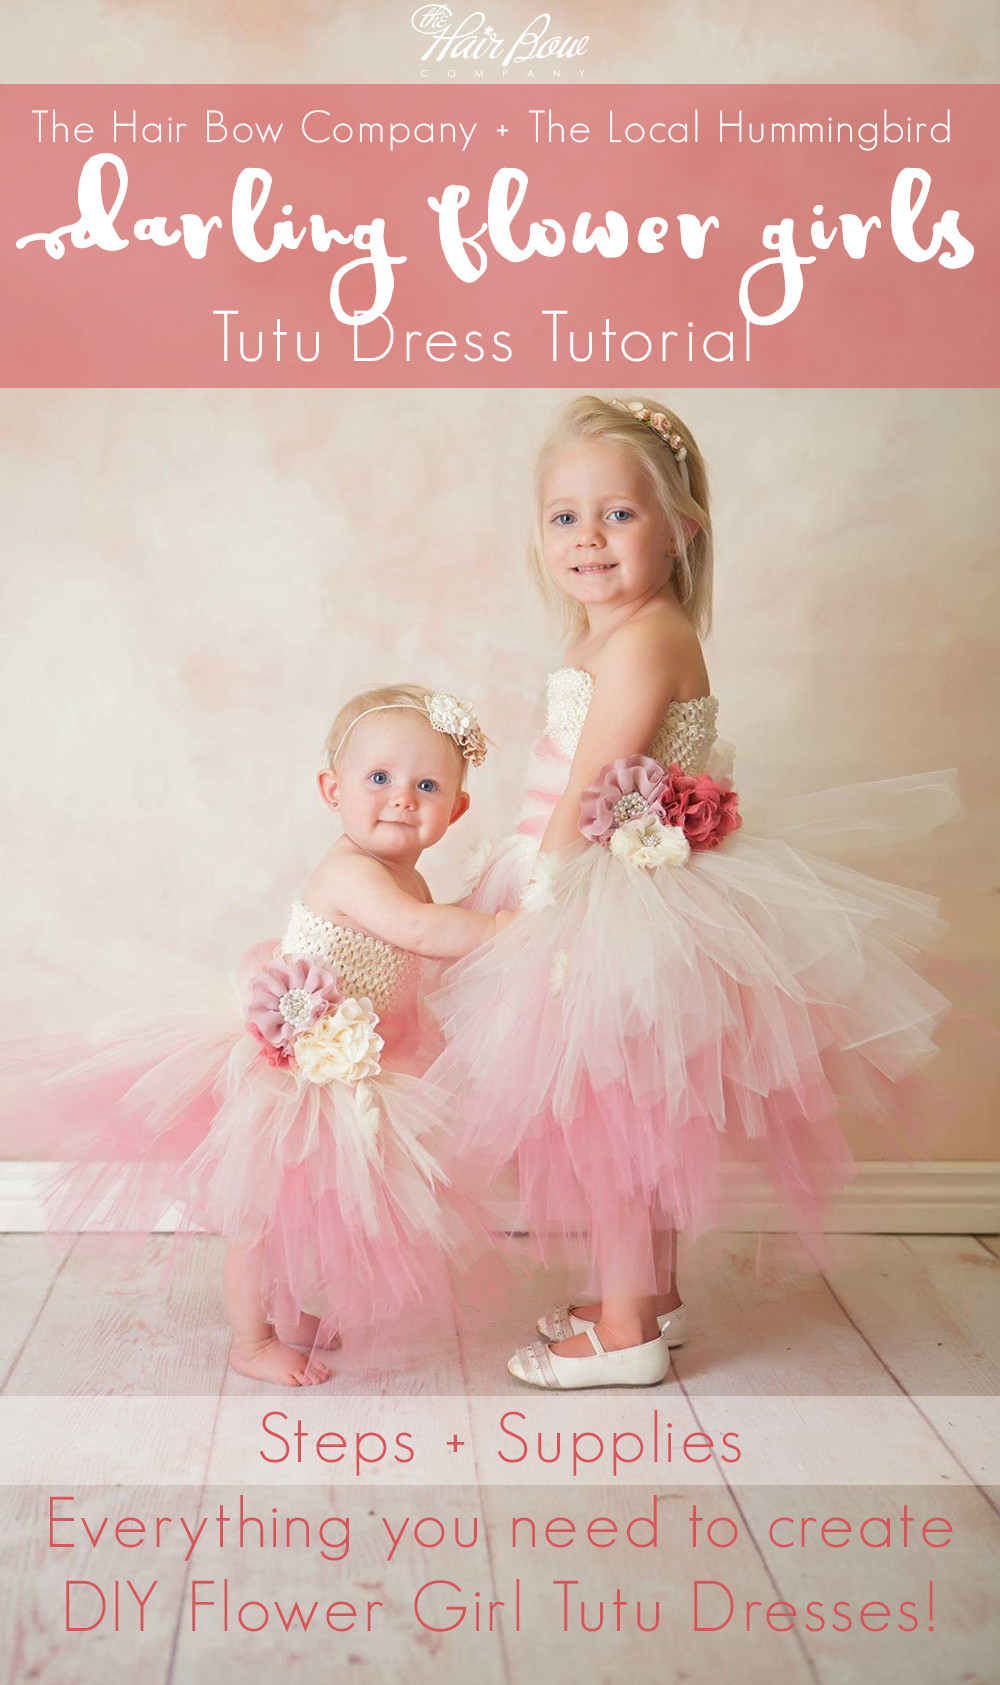 DIY Tutu Dresses For Toddlers
 Darling Flower Girl Tutu Dress DIY Tutorial The Hair Bow